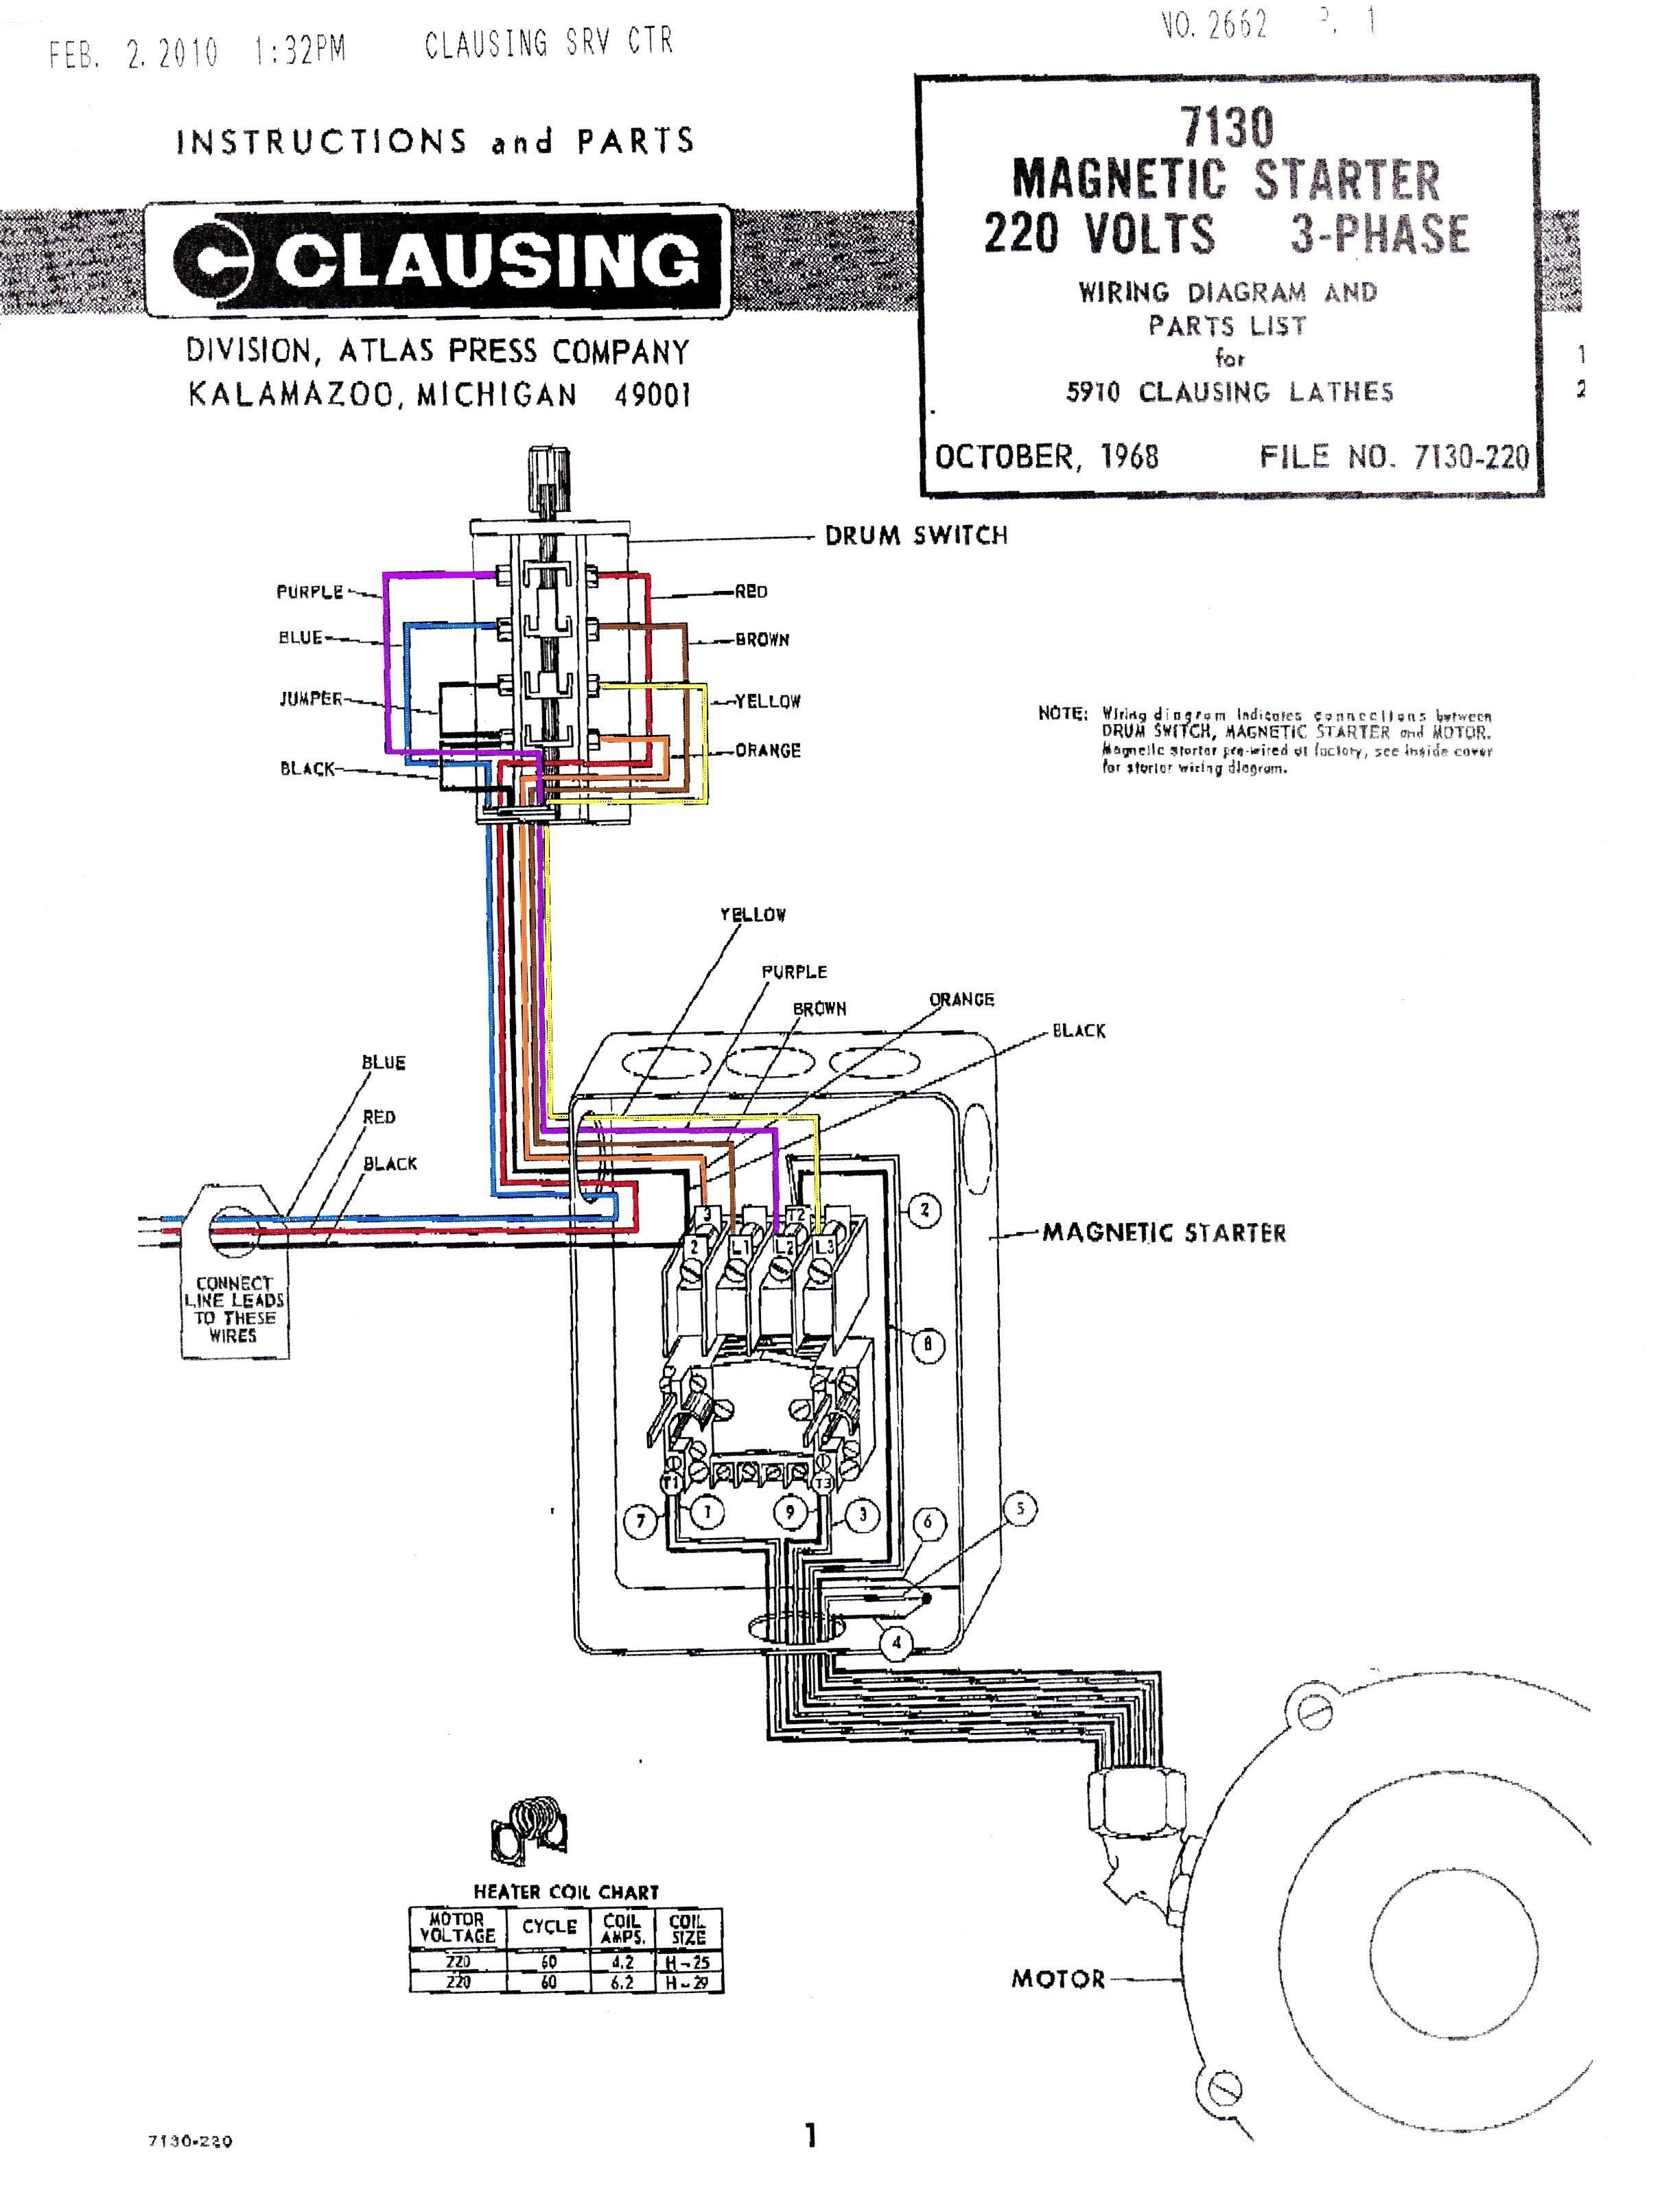 220 Volt Single Phase Motor Wiring Diagram Best Siemens Dol Starter Wiring Diagram Refrence Single Phase Wiring